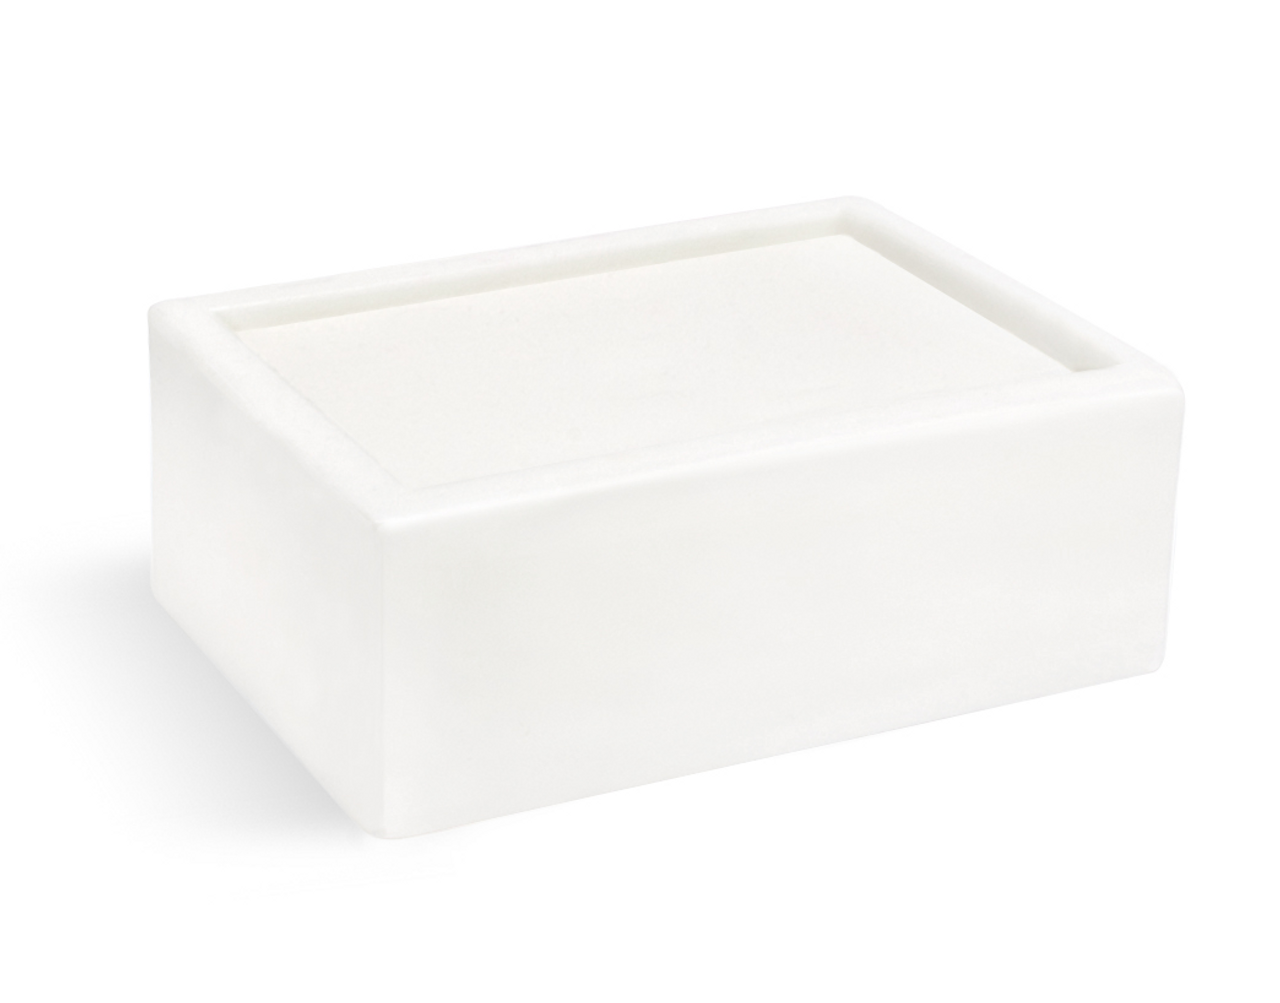  Saponify - 2Lb White Soap Base, Pure White Base, Easy